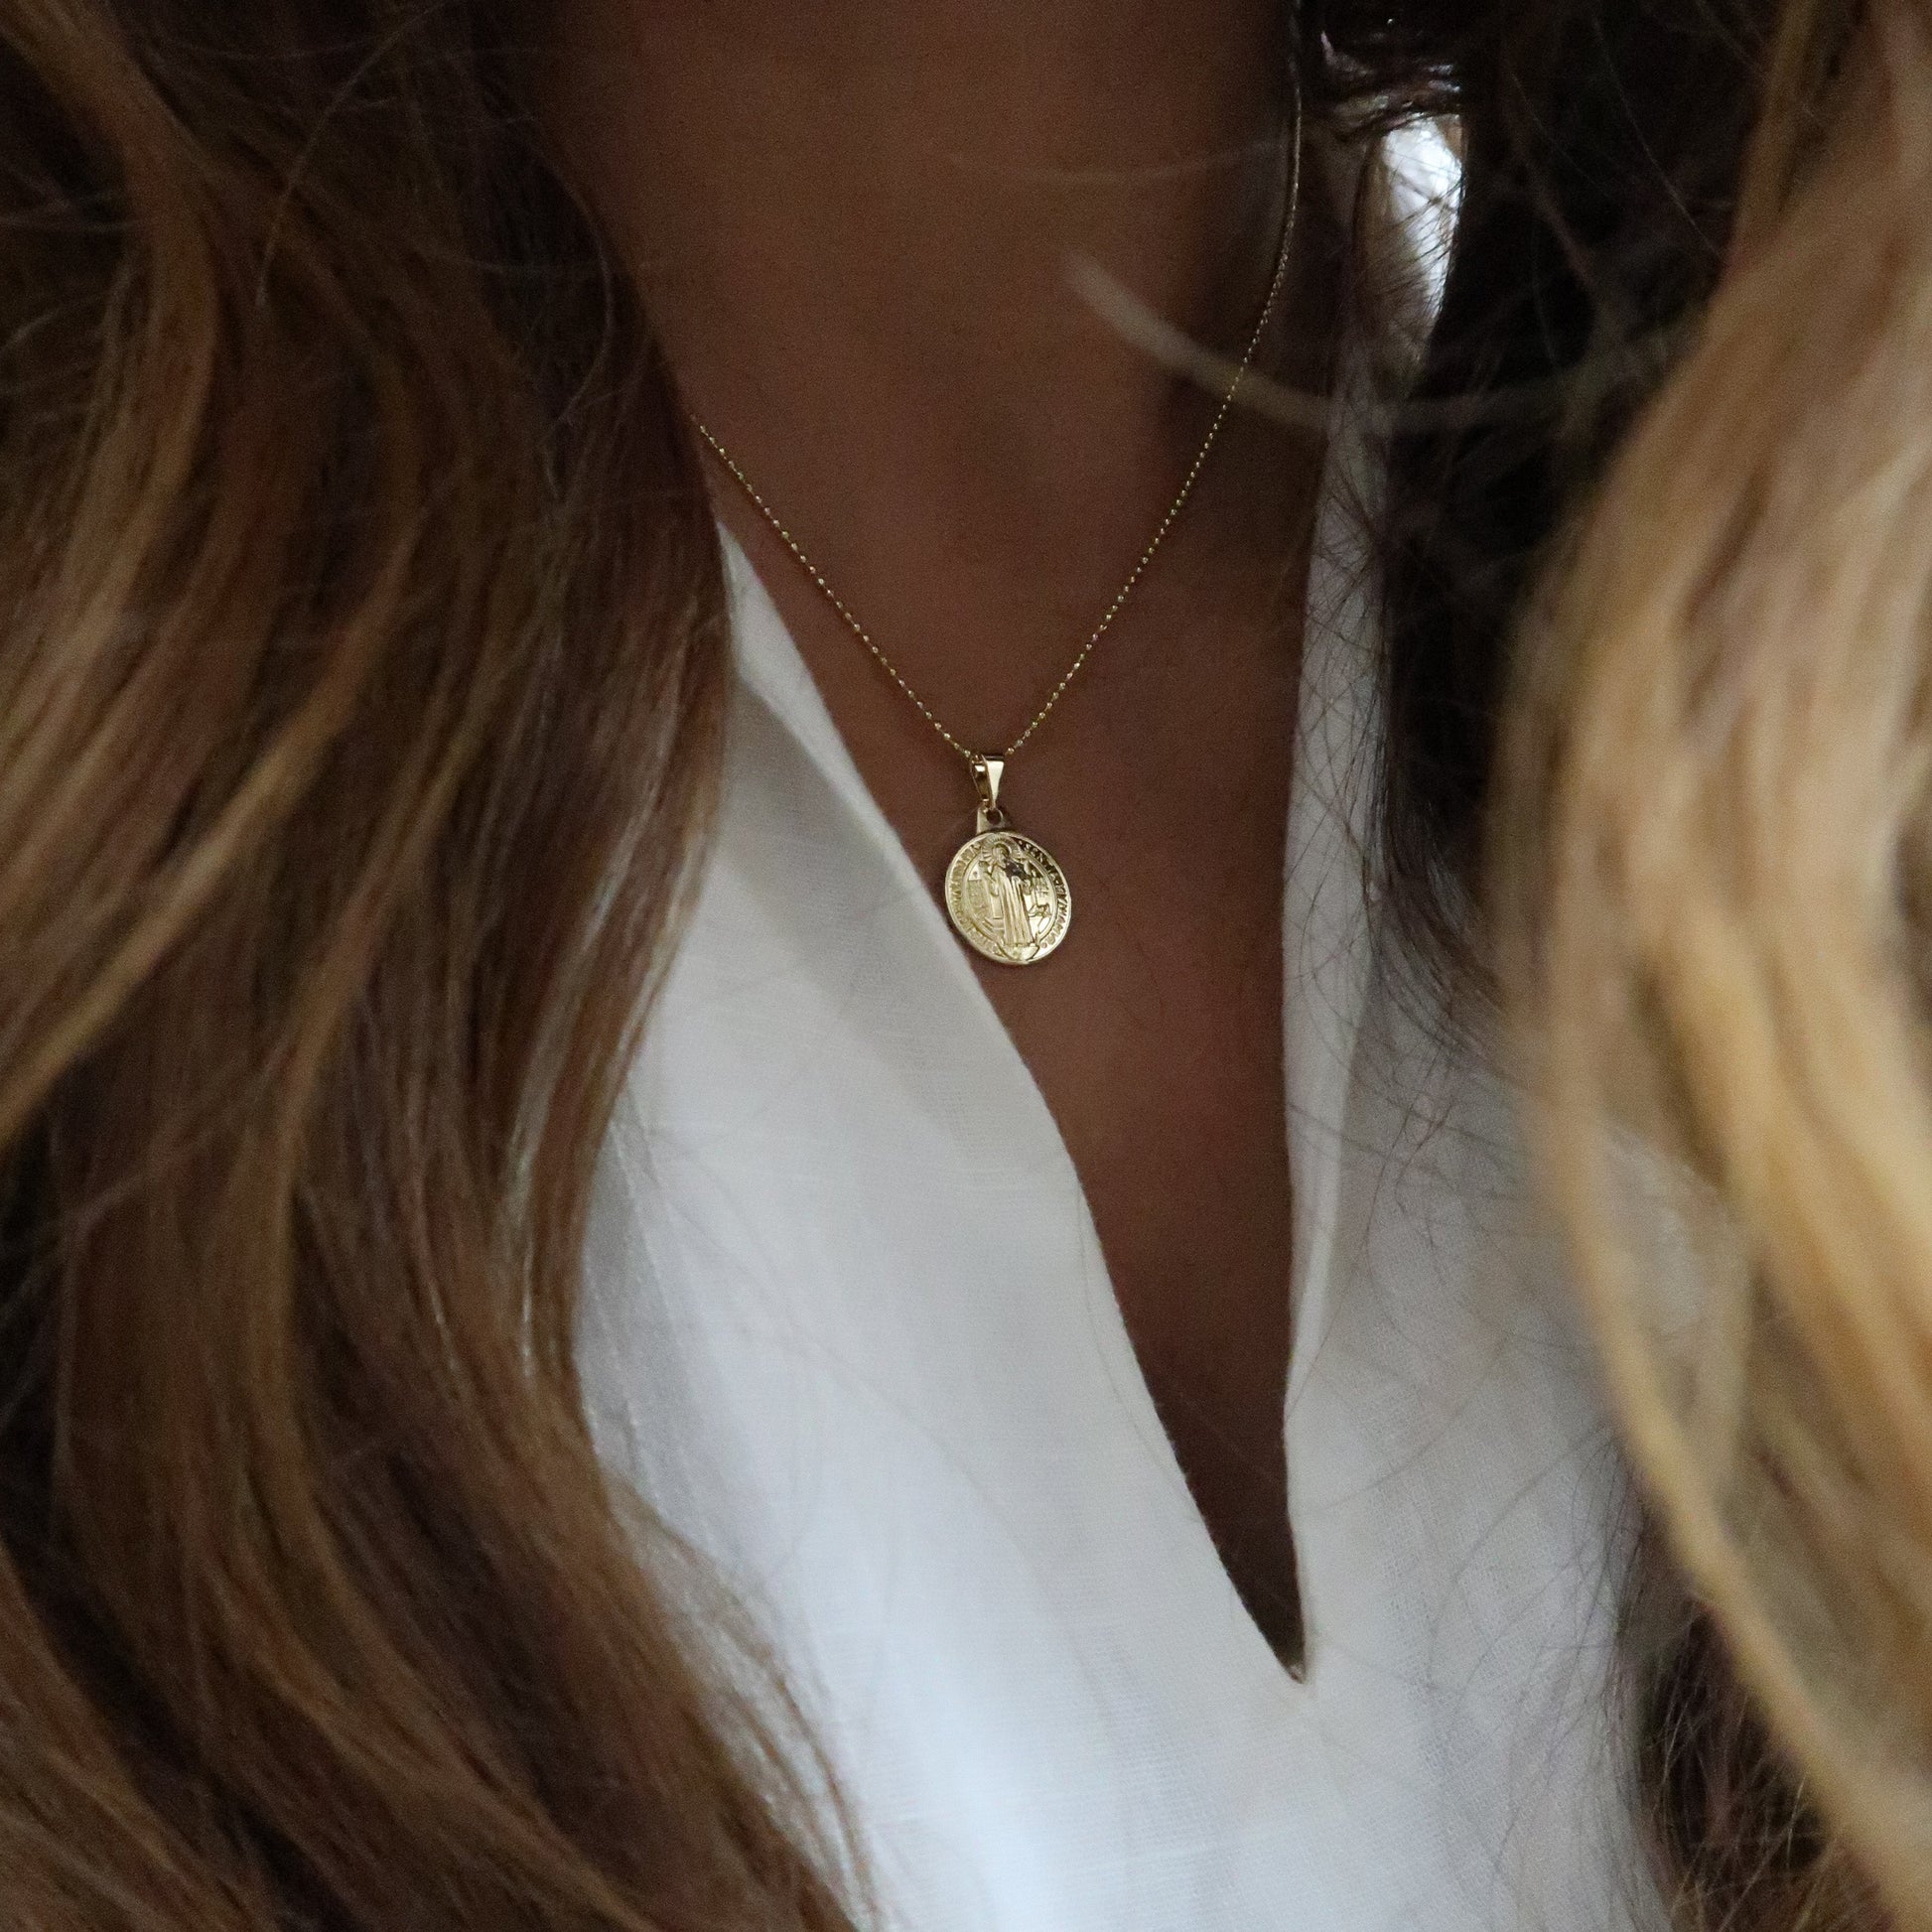 st-benedict-medal-necklace-gold-filled-mini